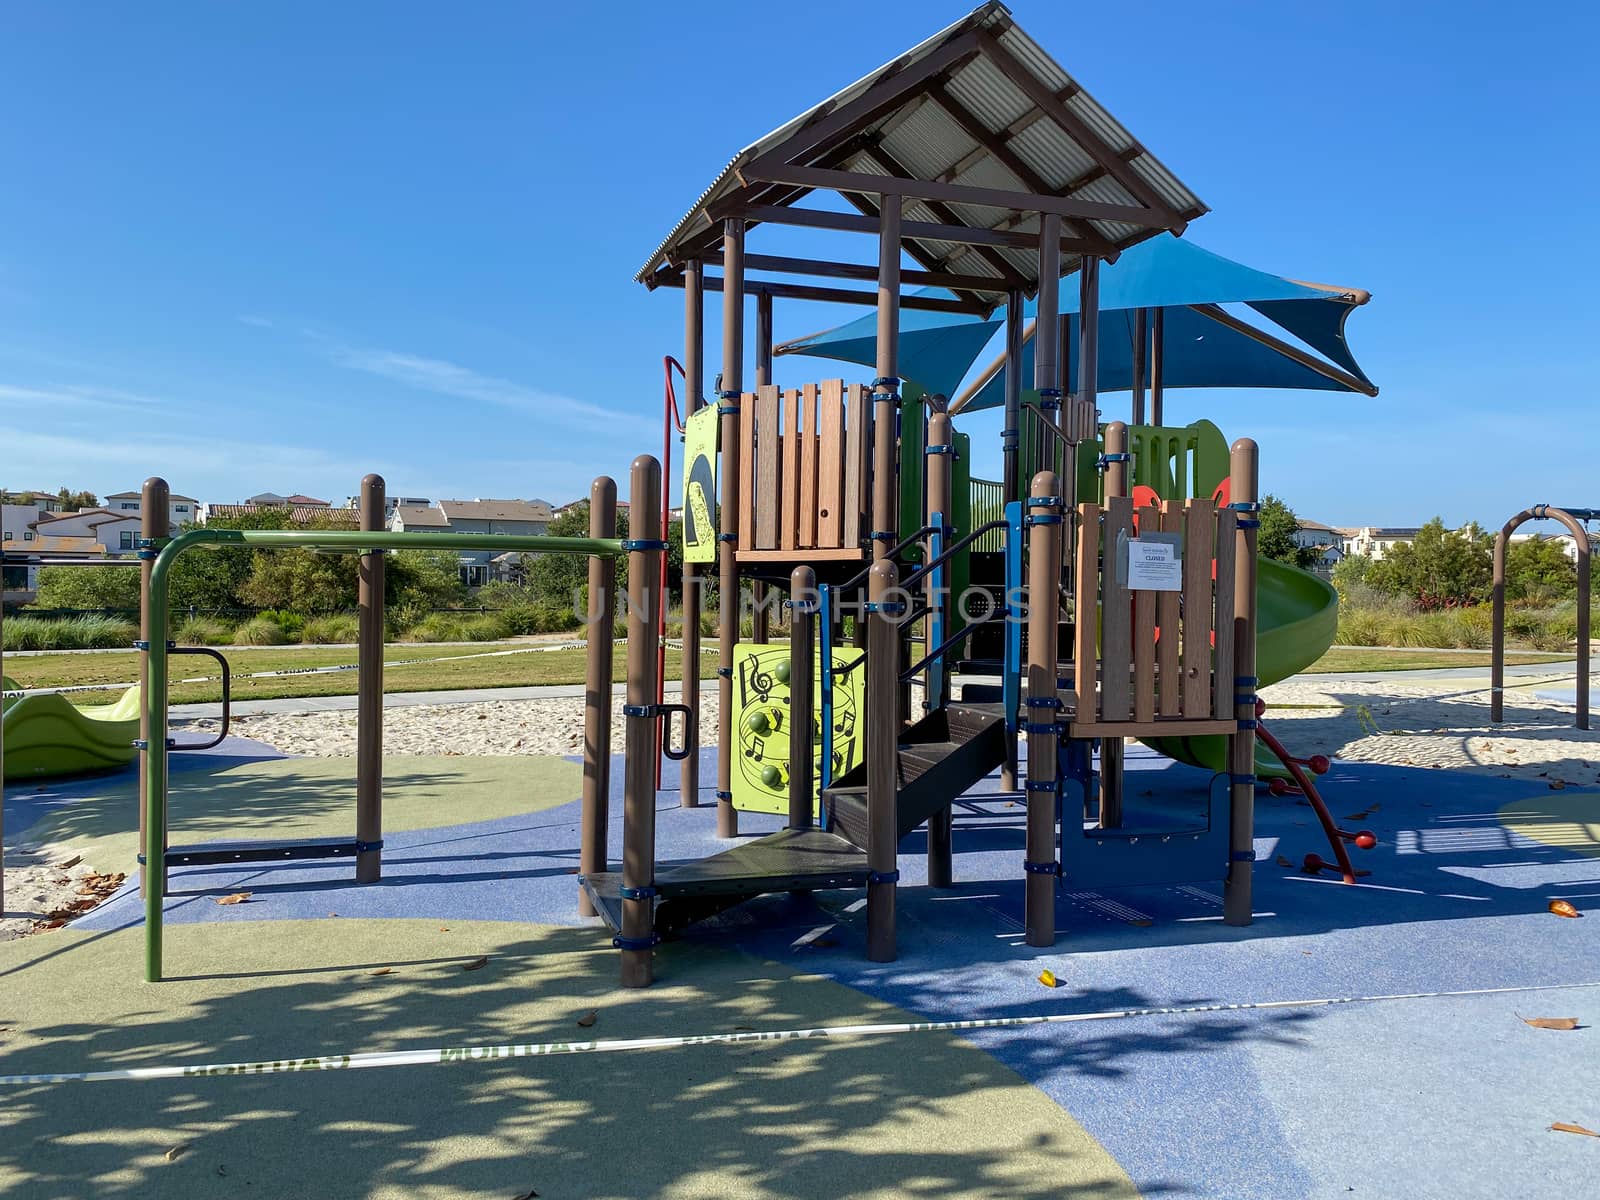 Closed community park with playground for kids due to Covid 19. Coronavirus virus panic and quarantine in San Diego, California, USA.